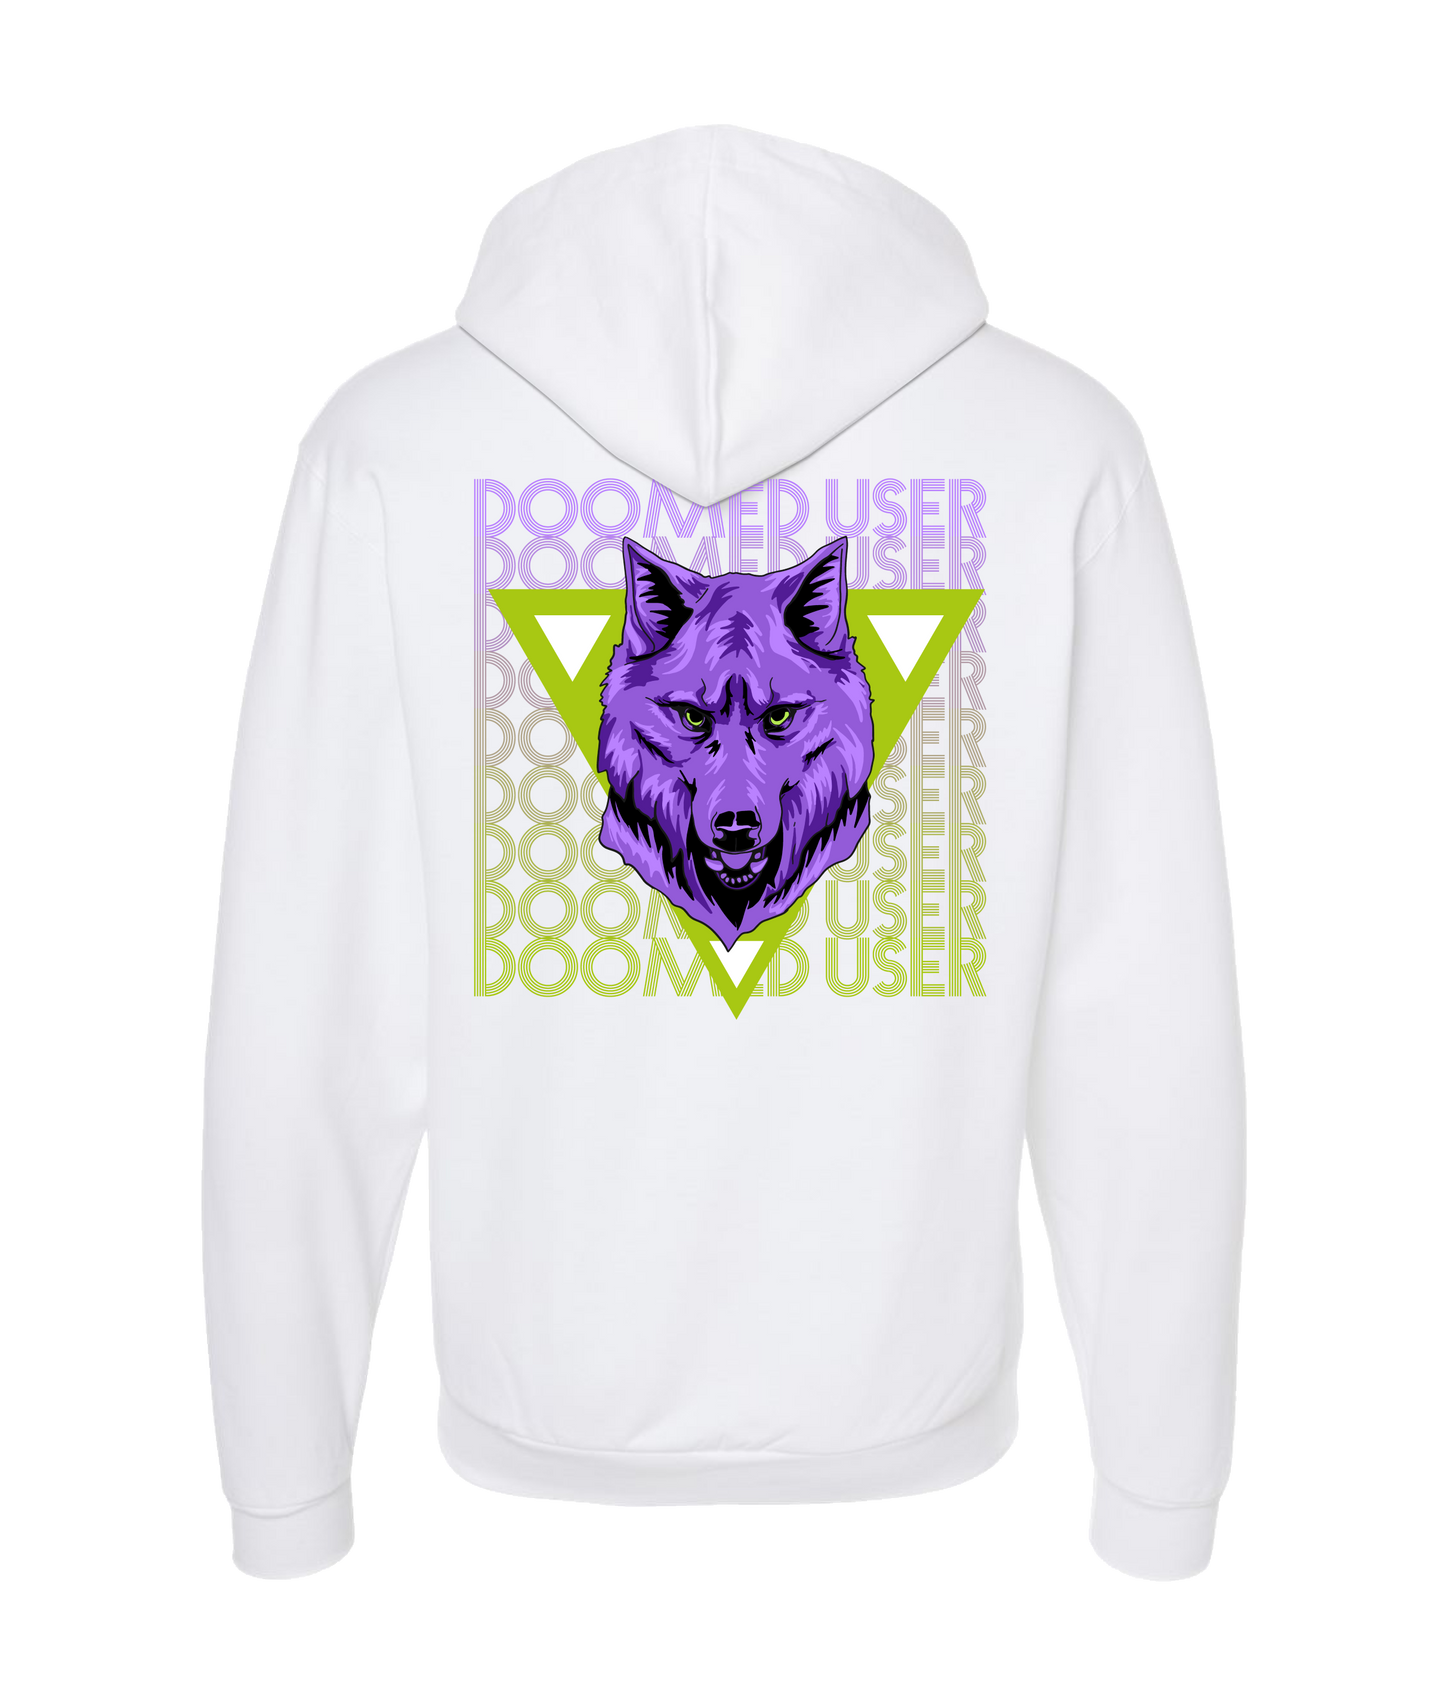 Doomed User - Wolf Purple - White Zip Up Hoodie